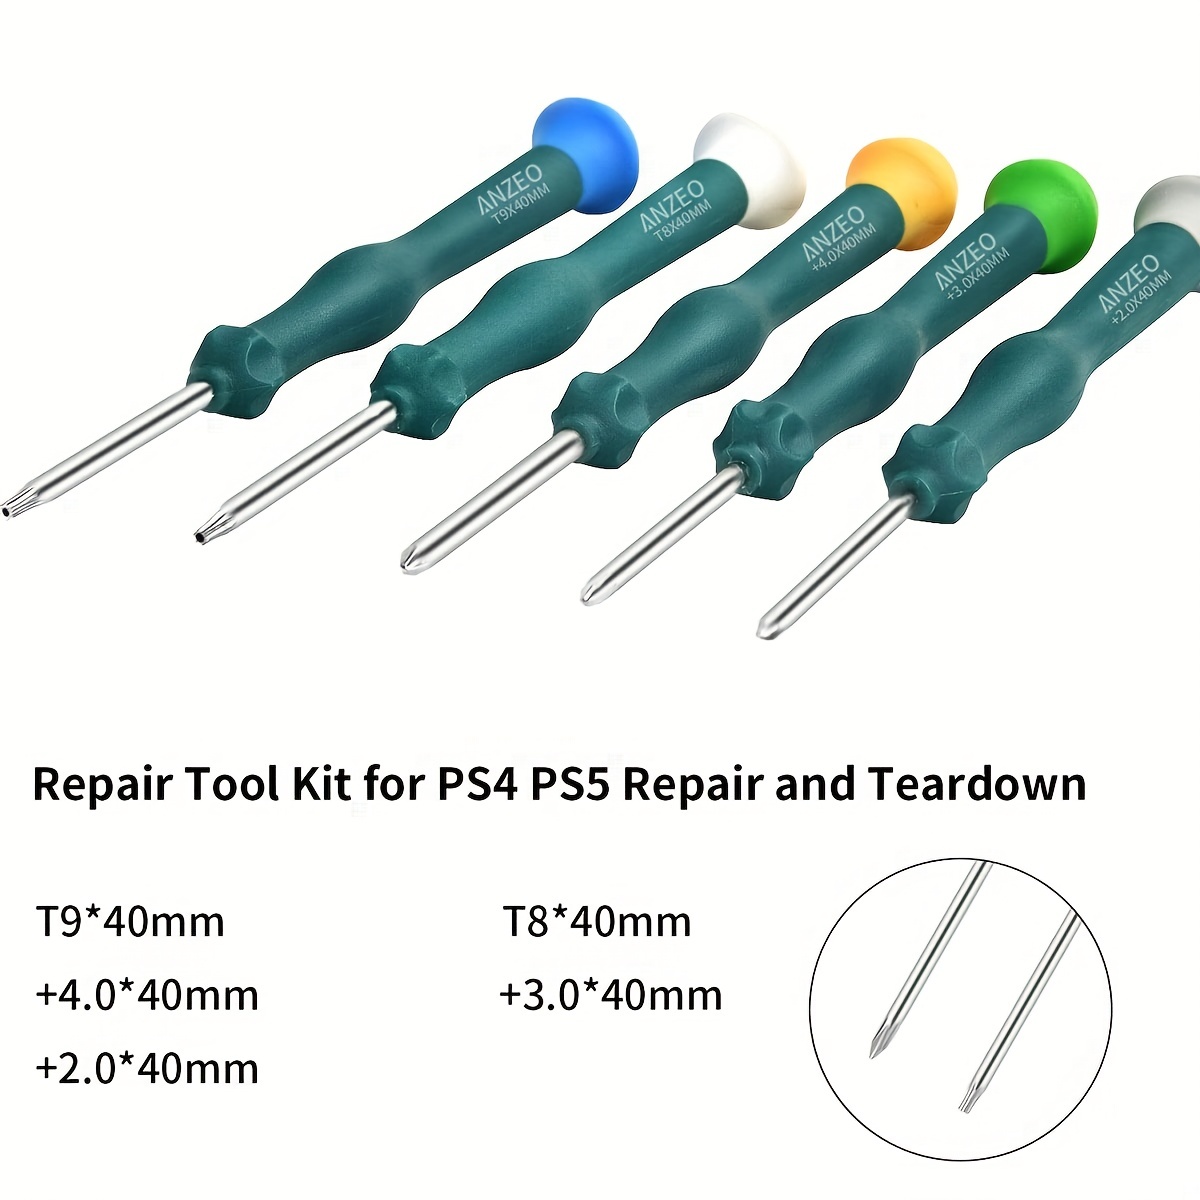 PS4 Tools for PlayStation 4 Screwdriver TORX T9 Security PS4 Repair Tool